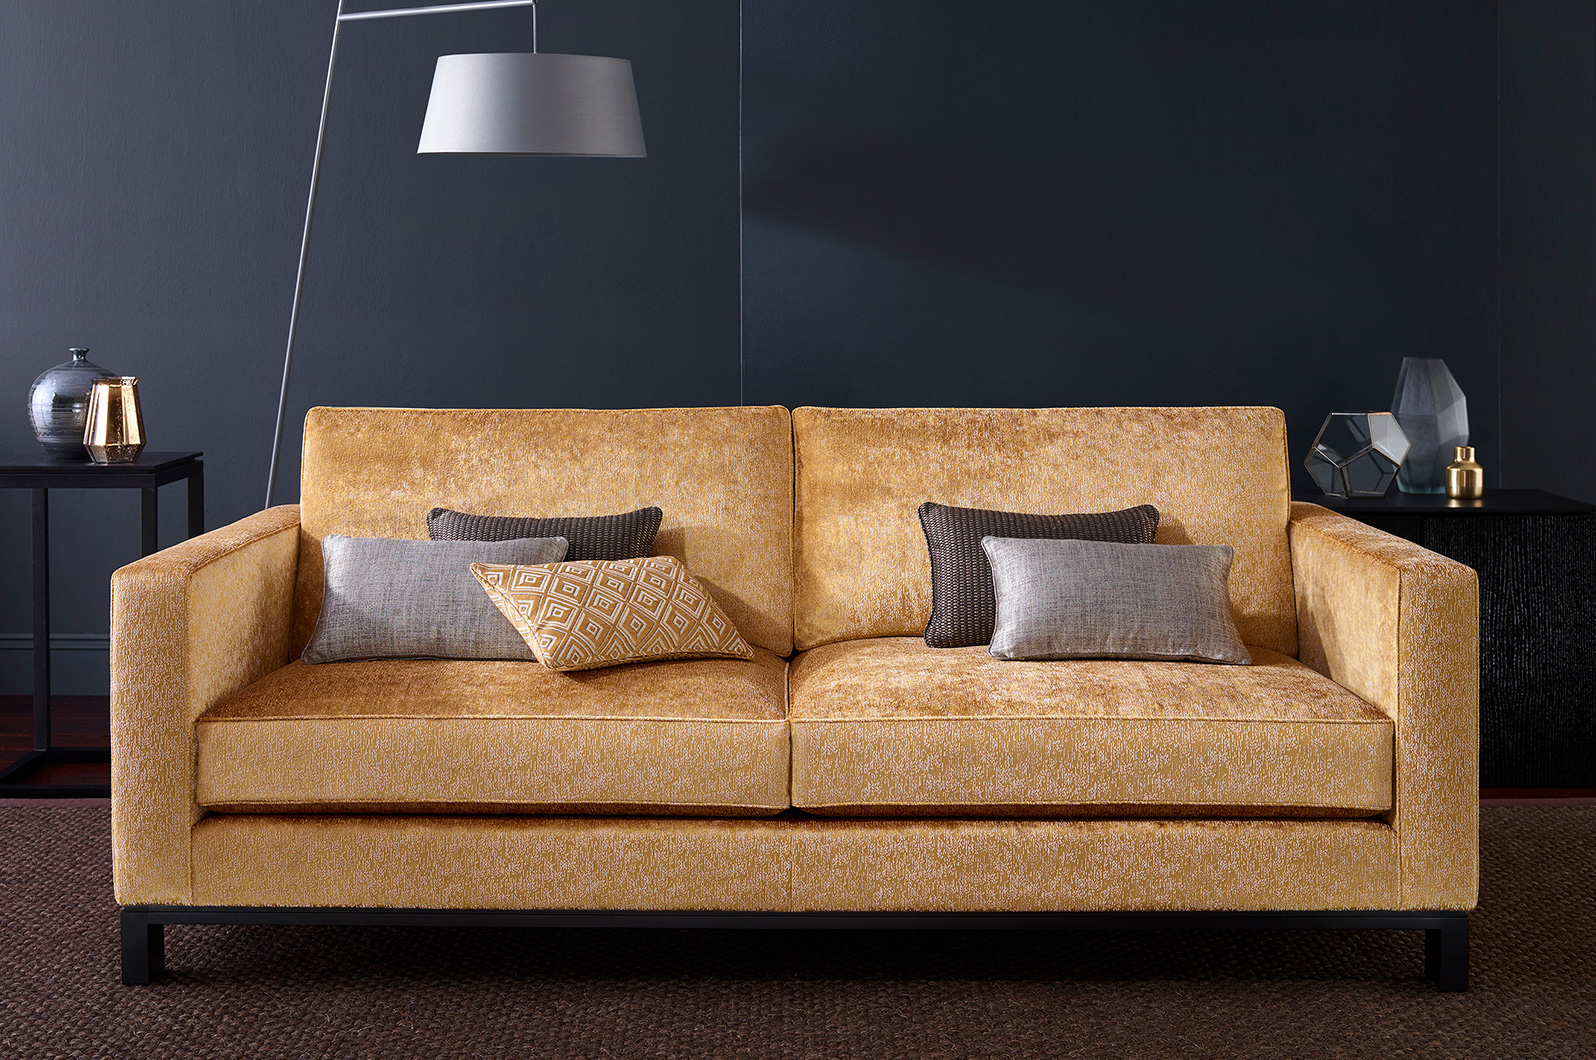 Studio set shot designed and lit to emphasize the geometric nature of the sofa design.